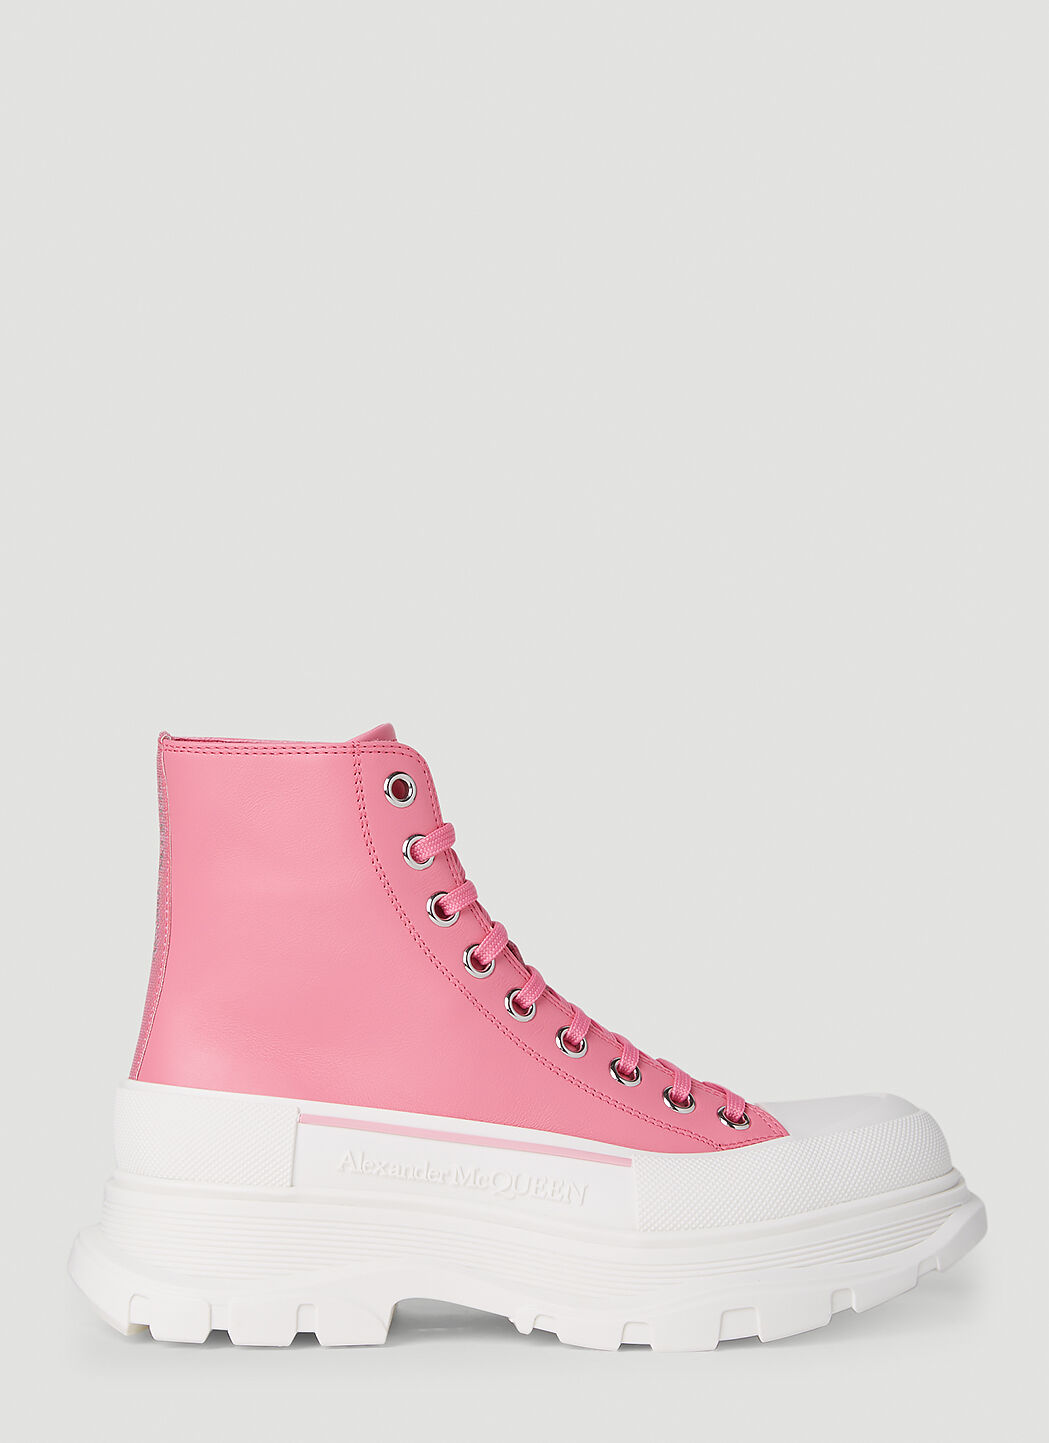 Alexander McQueen Tread Slick Boots Pink amq0251077